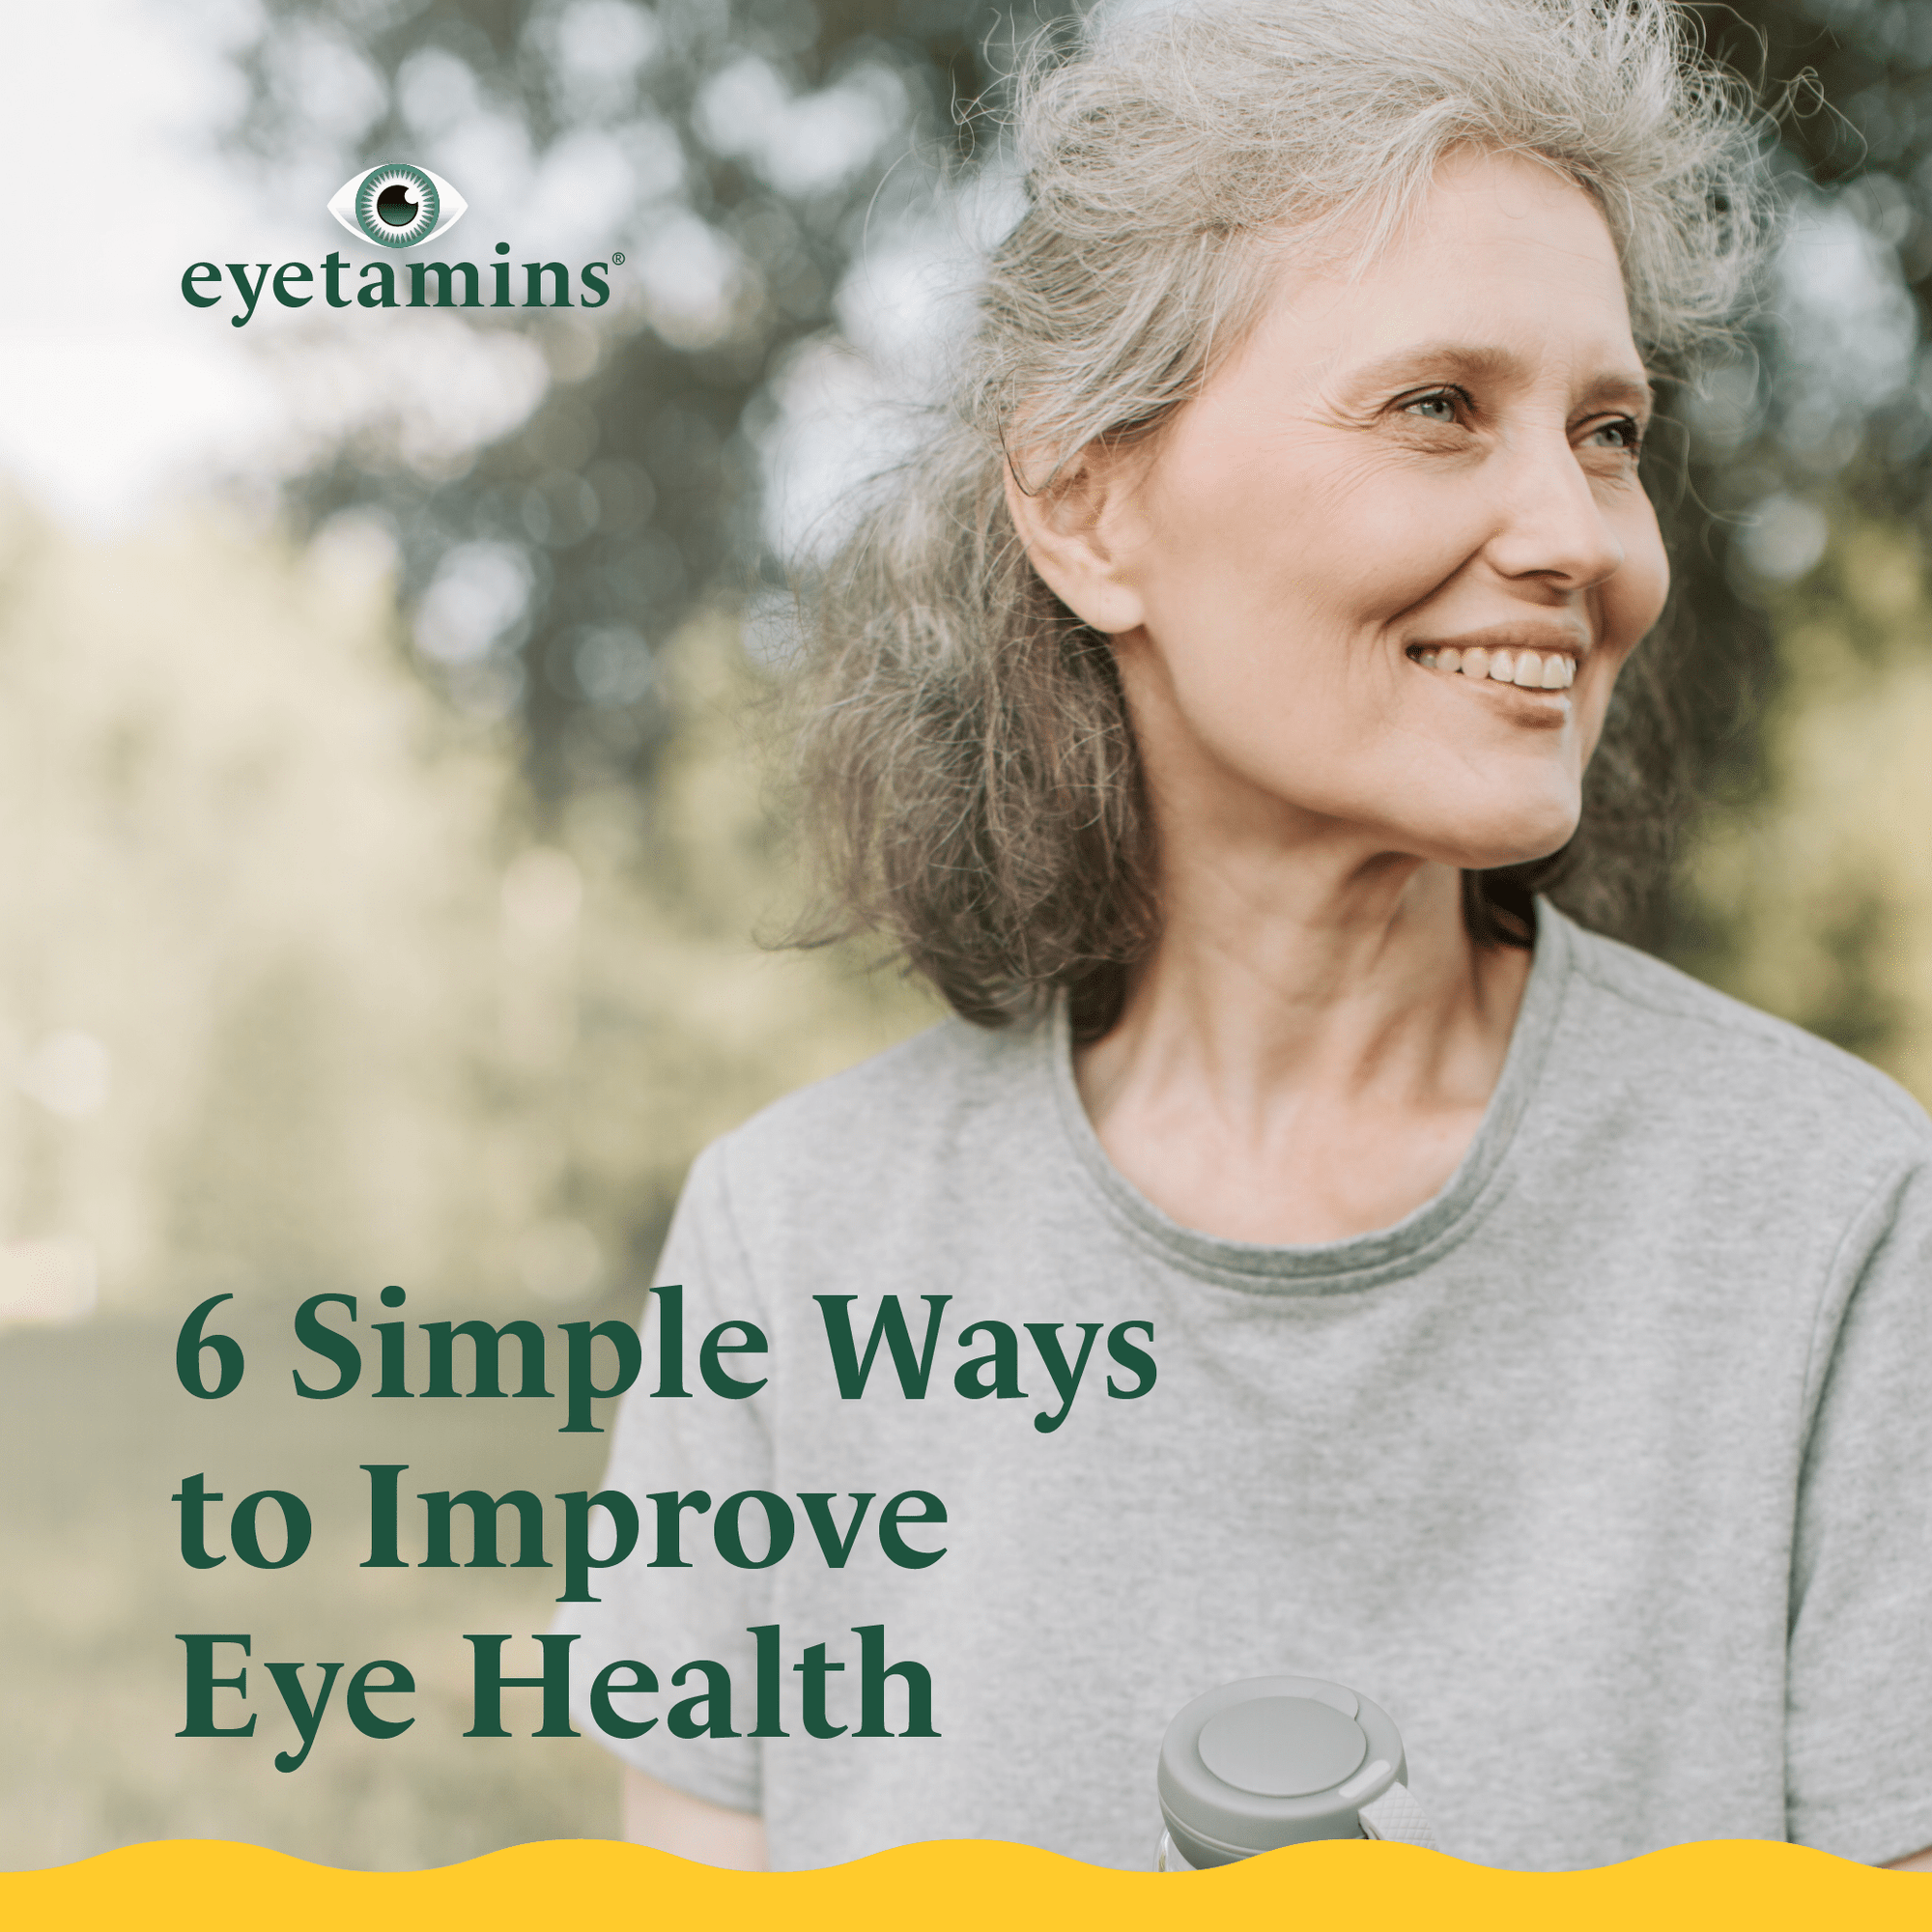 Eyetamins - 6 Simple Ways to Improve Eye Health